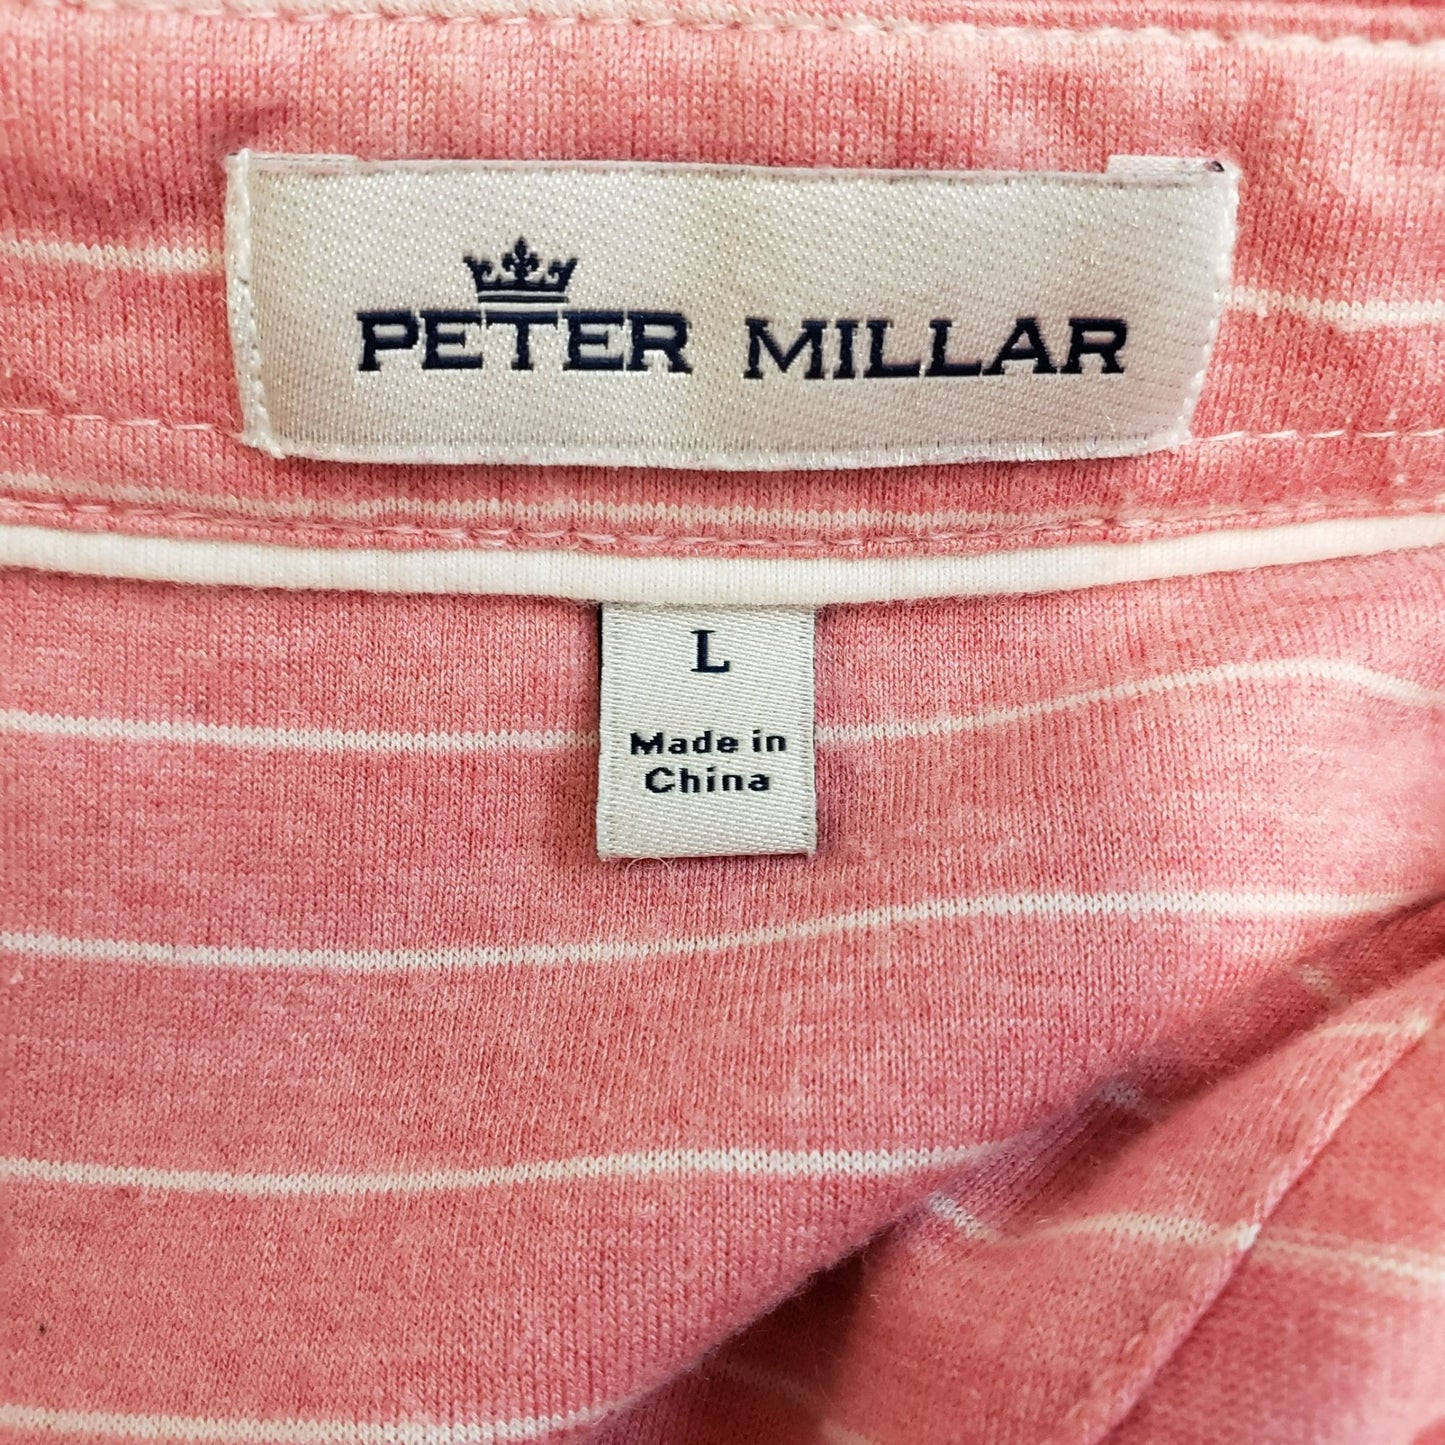 Peter Millar Linen Blend Striped Polo Shirt Size Large